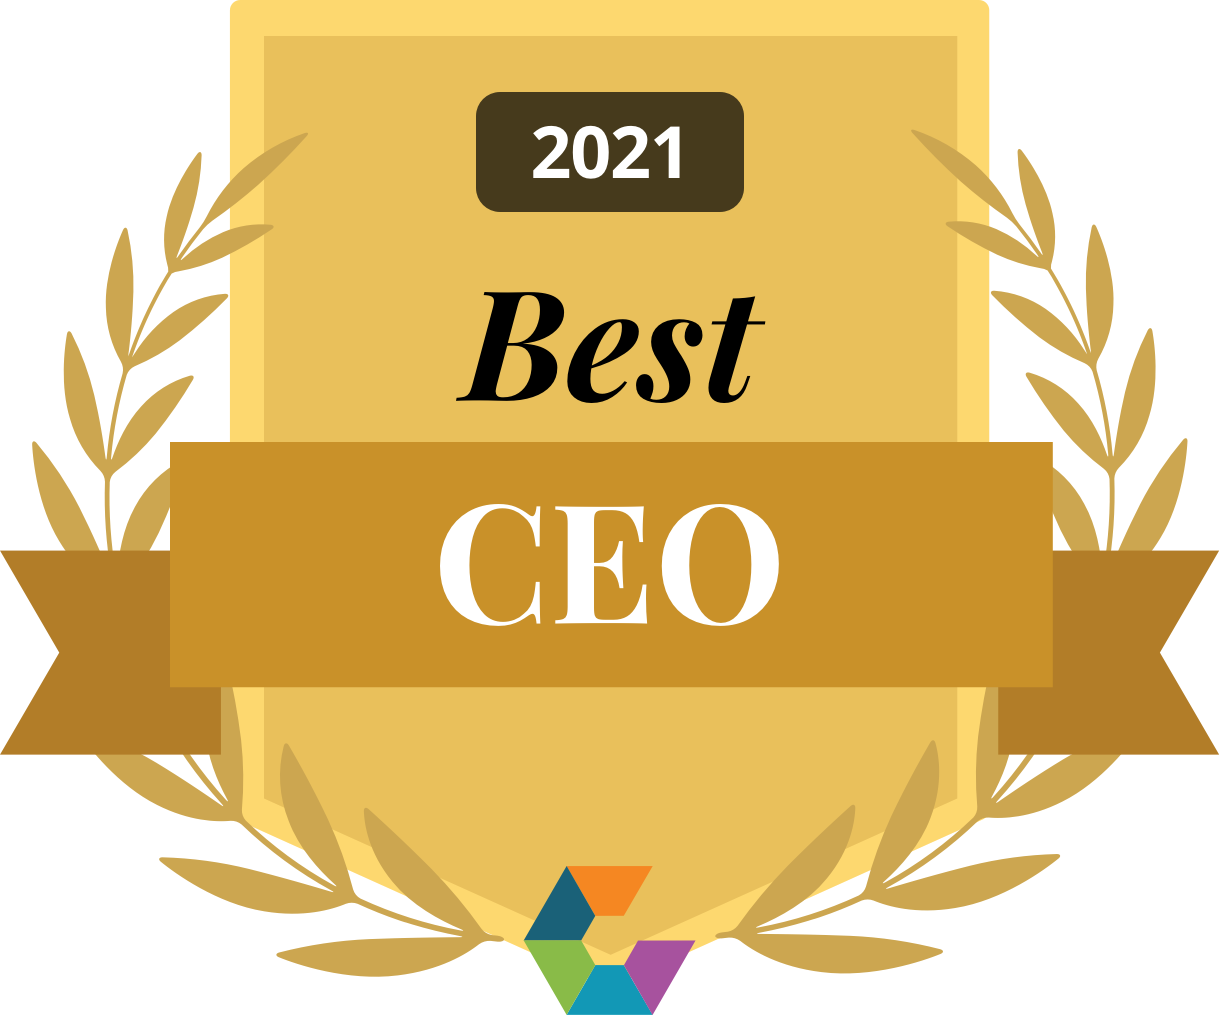 2021 Best CEO